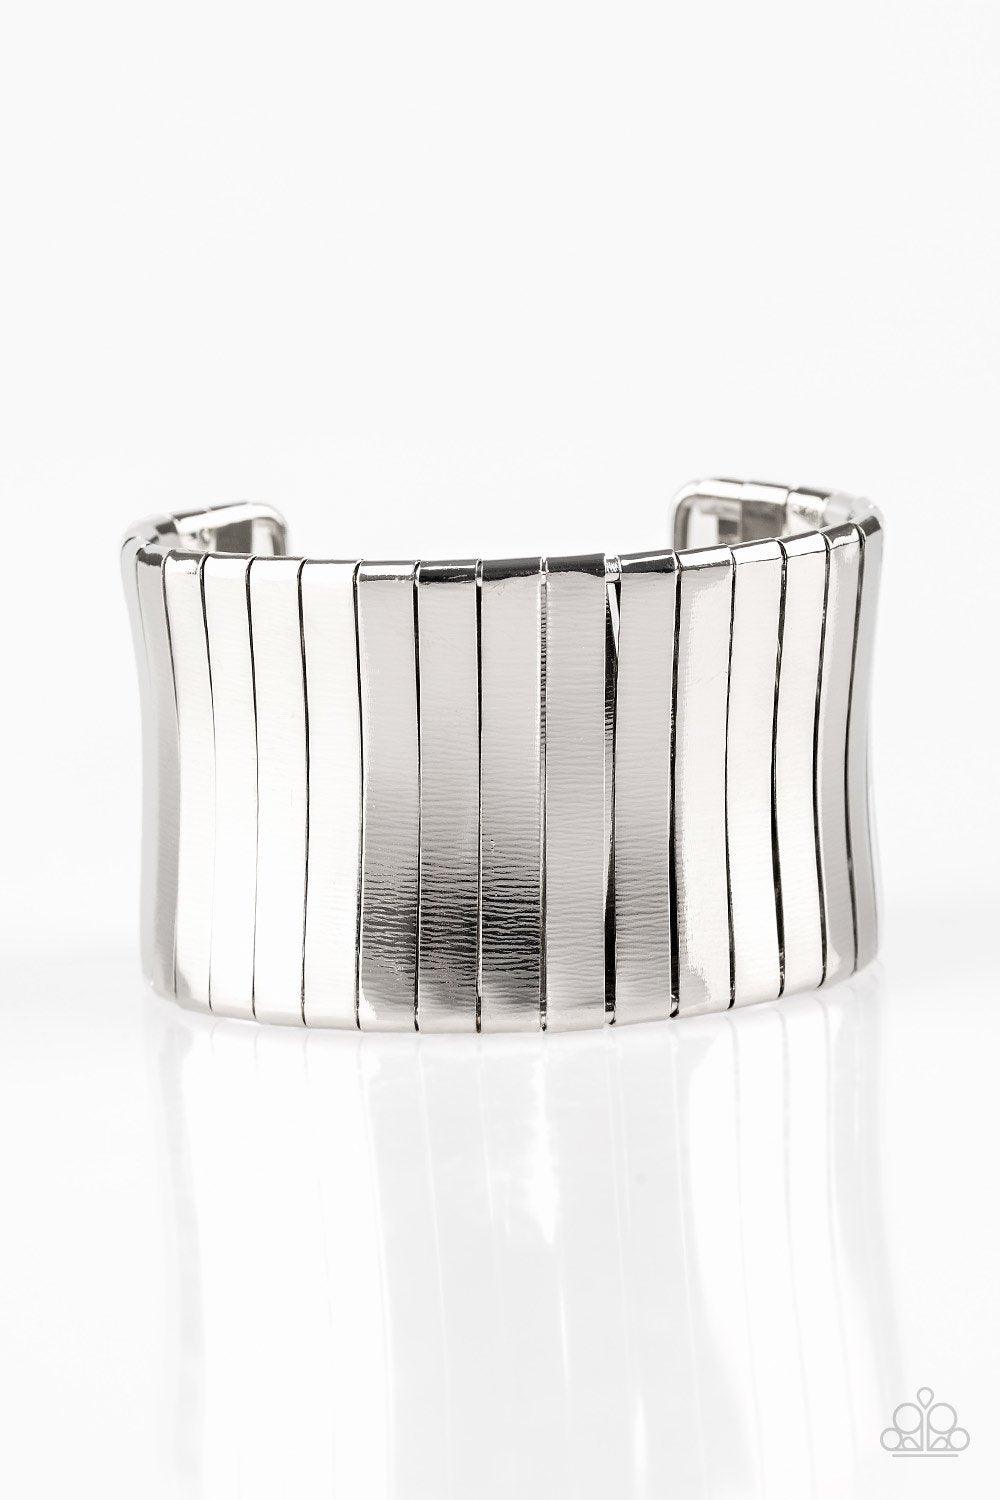 Urban Uptrend Silver Bracelet - by Jewelry Bretta